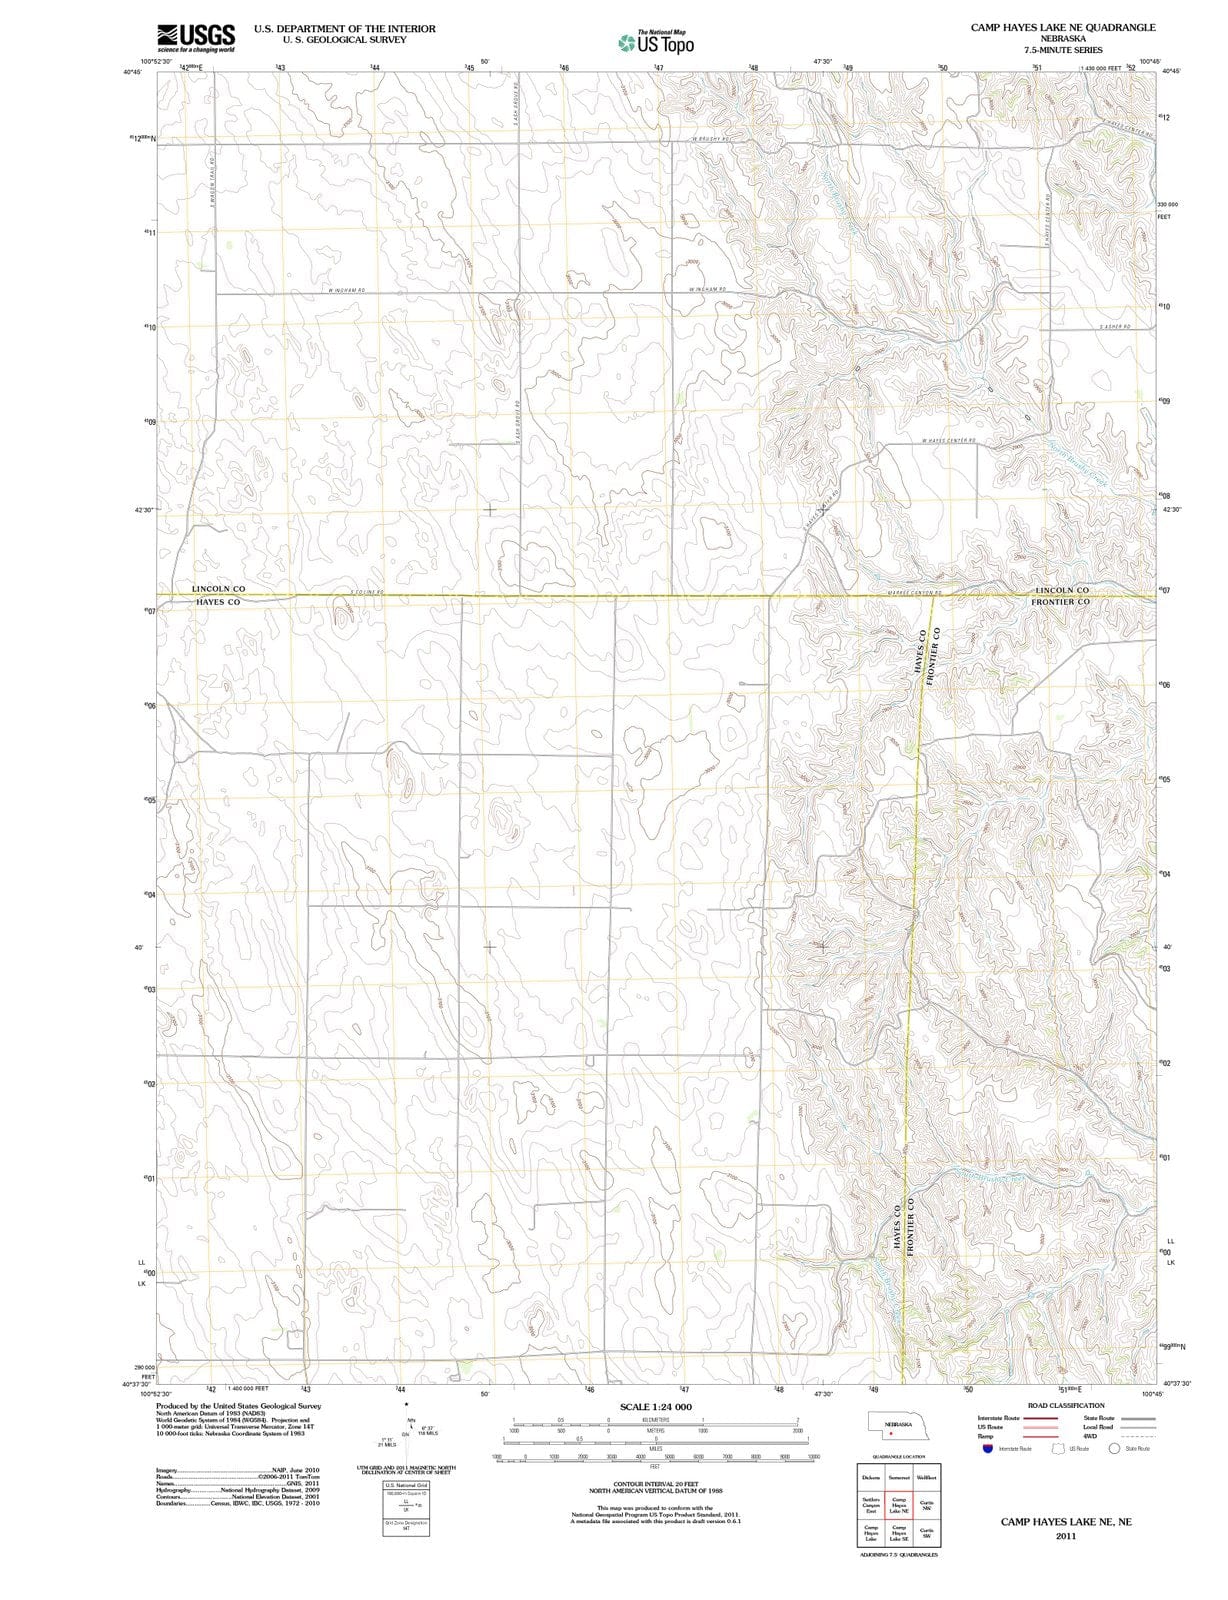 2011 Camp Hayes Lake, NE - Nebraska - USGS Topographic Map v3